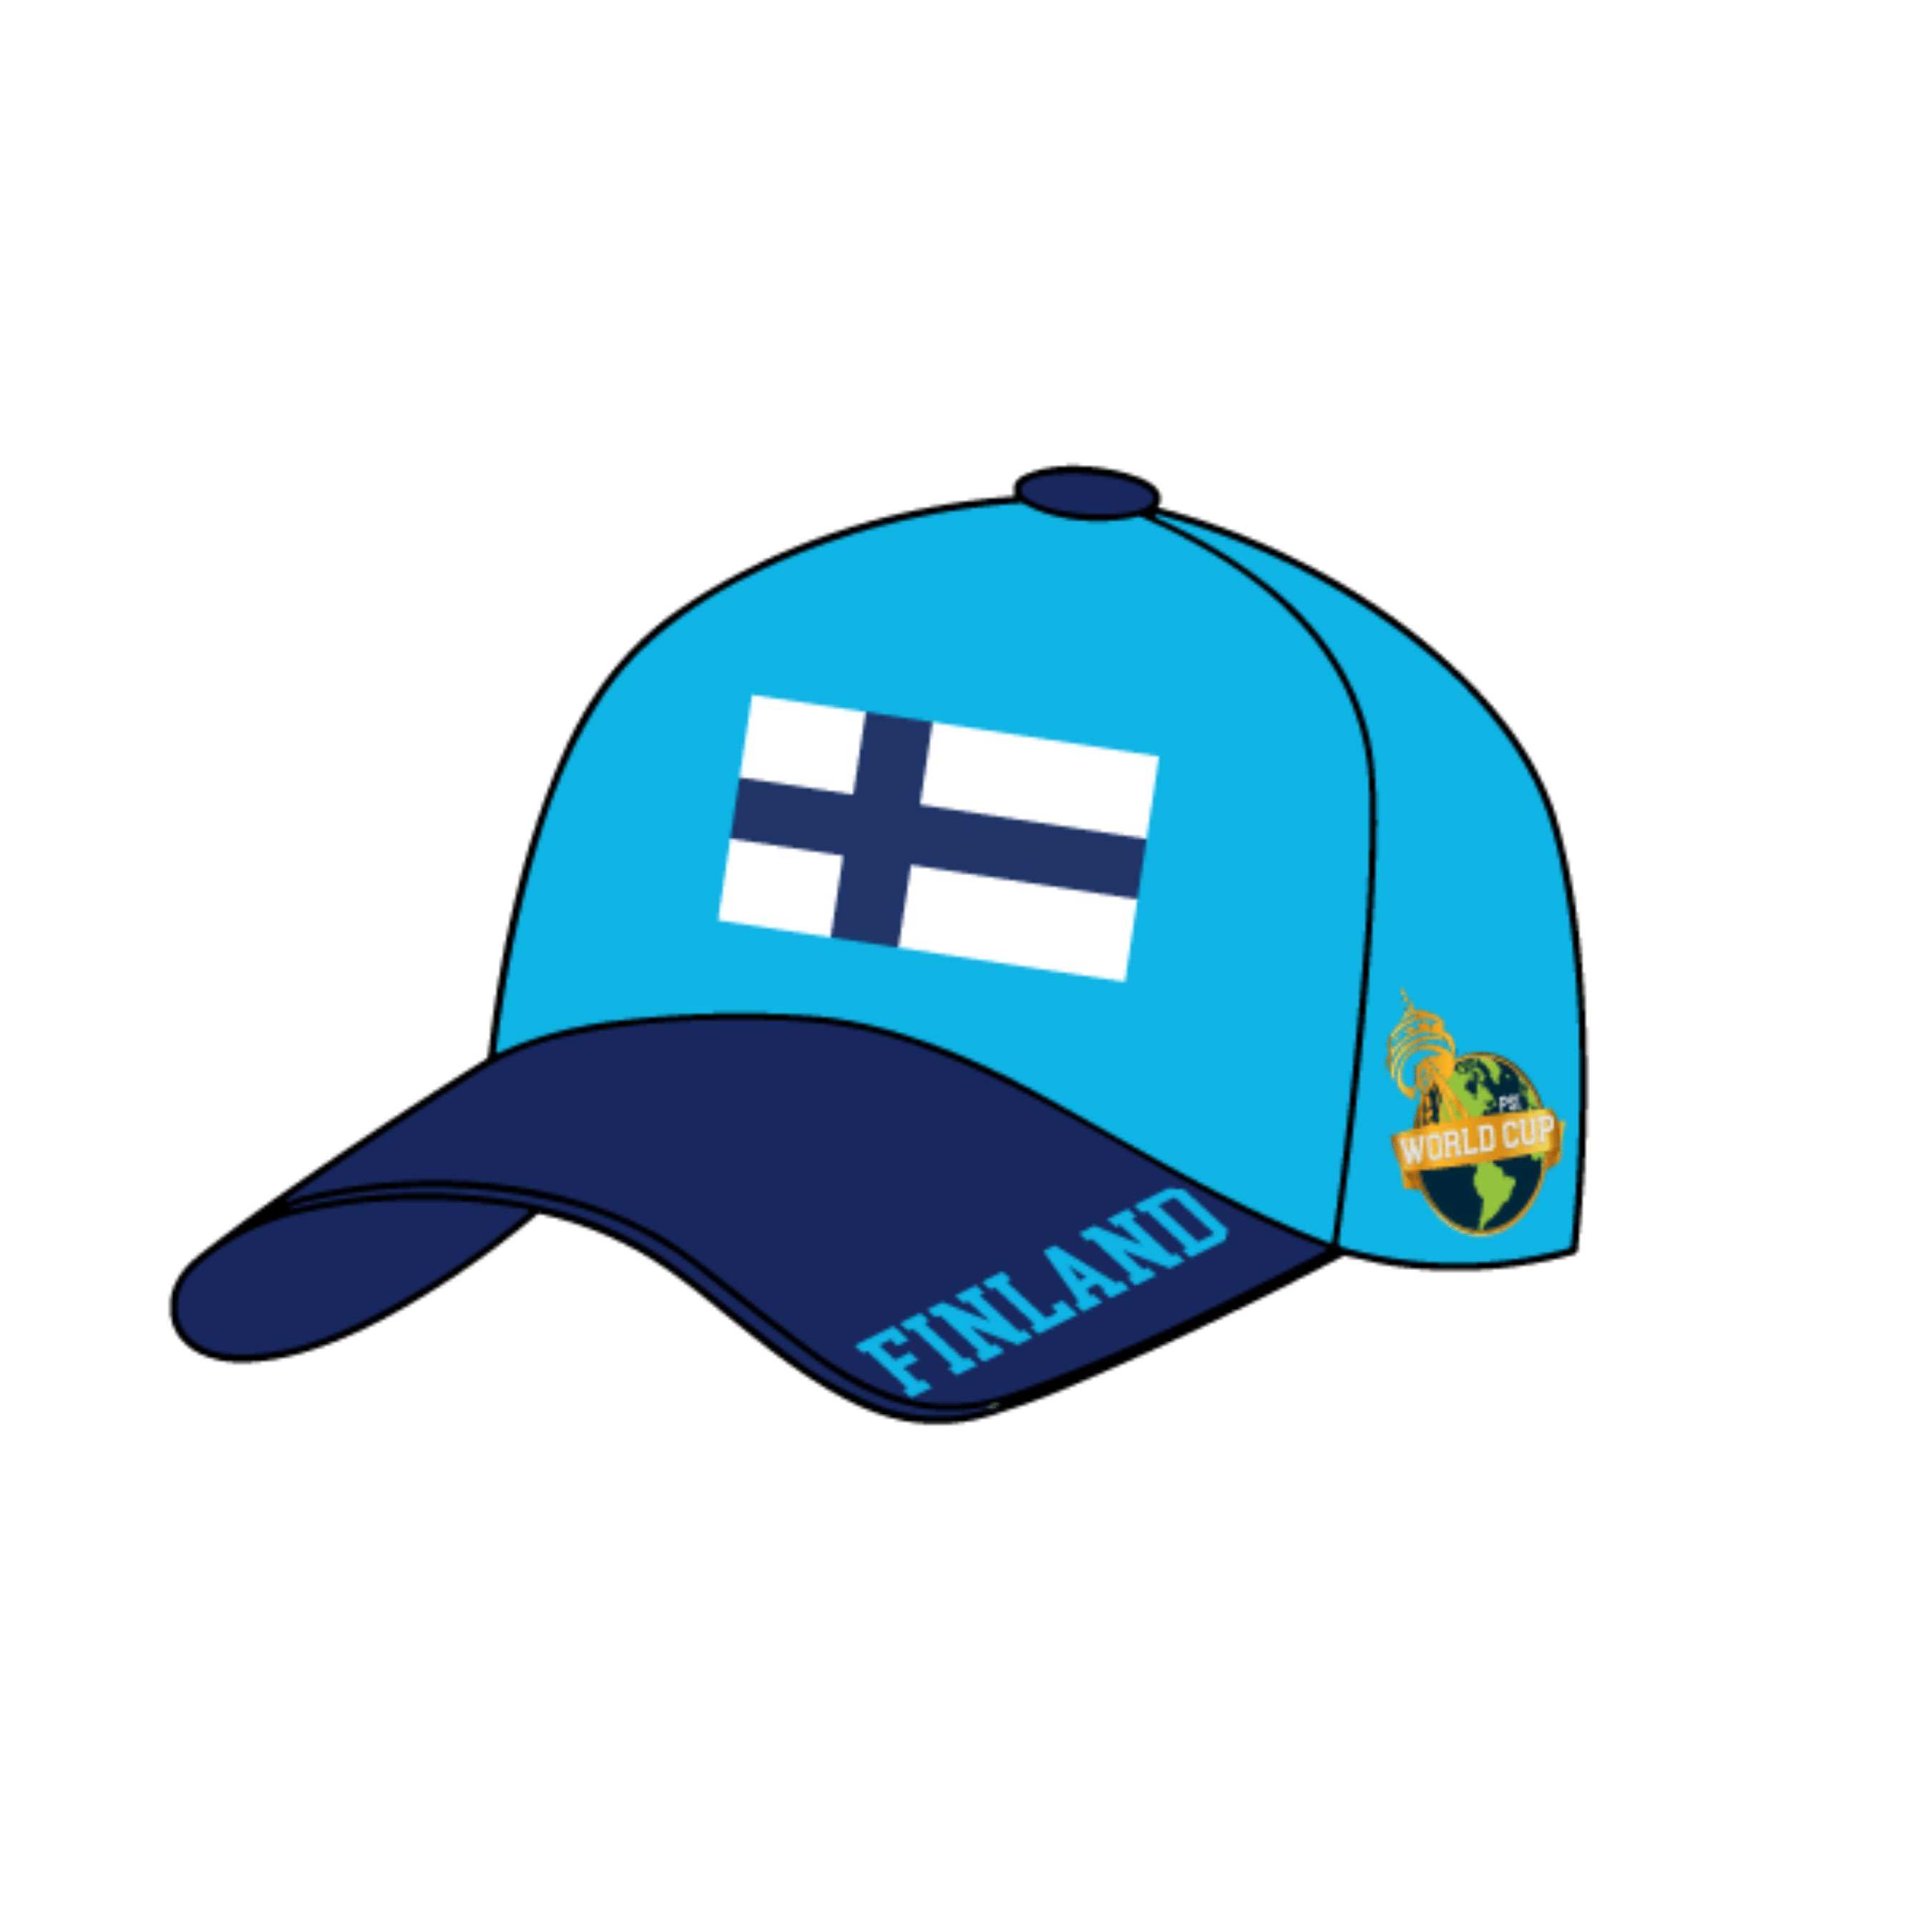 Finland World Cup Gold Bundle